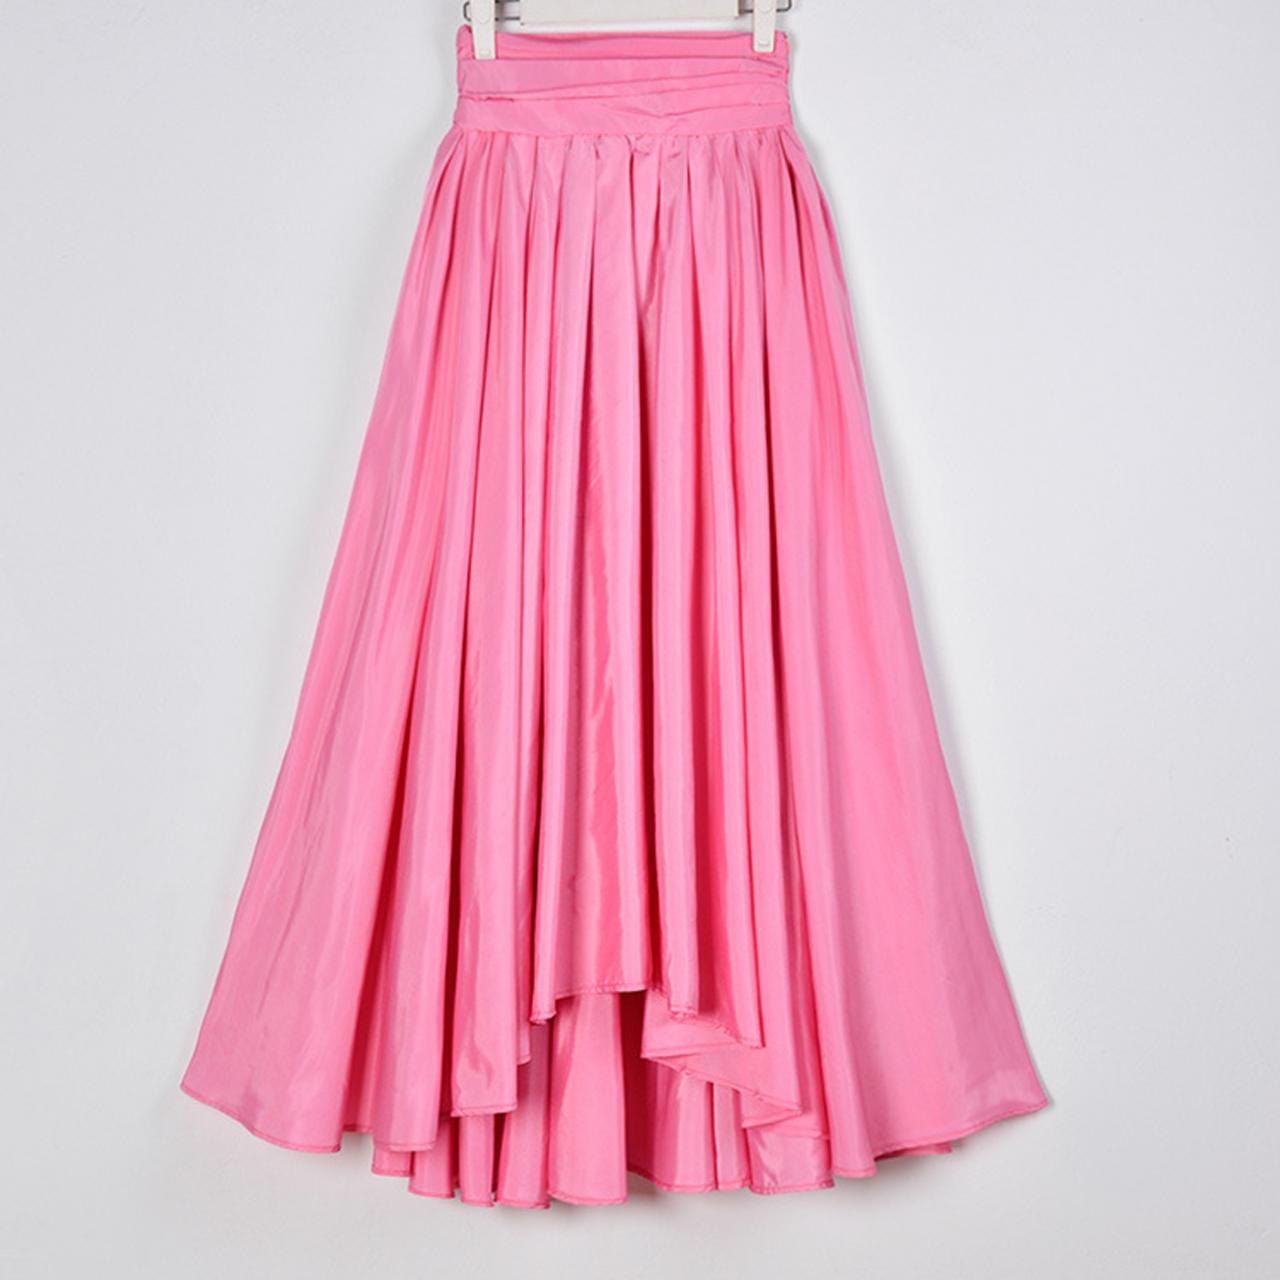 Elegant Dark Pink High Low Long Skirts, High Quality Women Pink Skirts, Fashionable Skirts